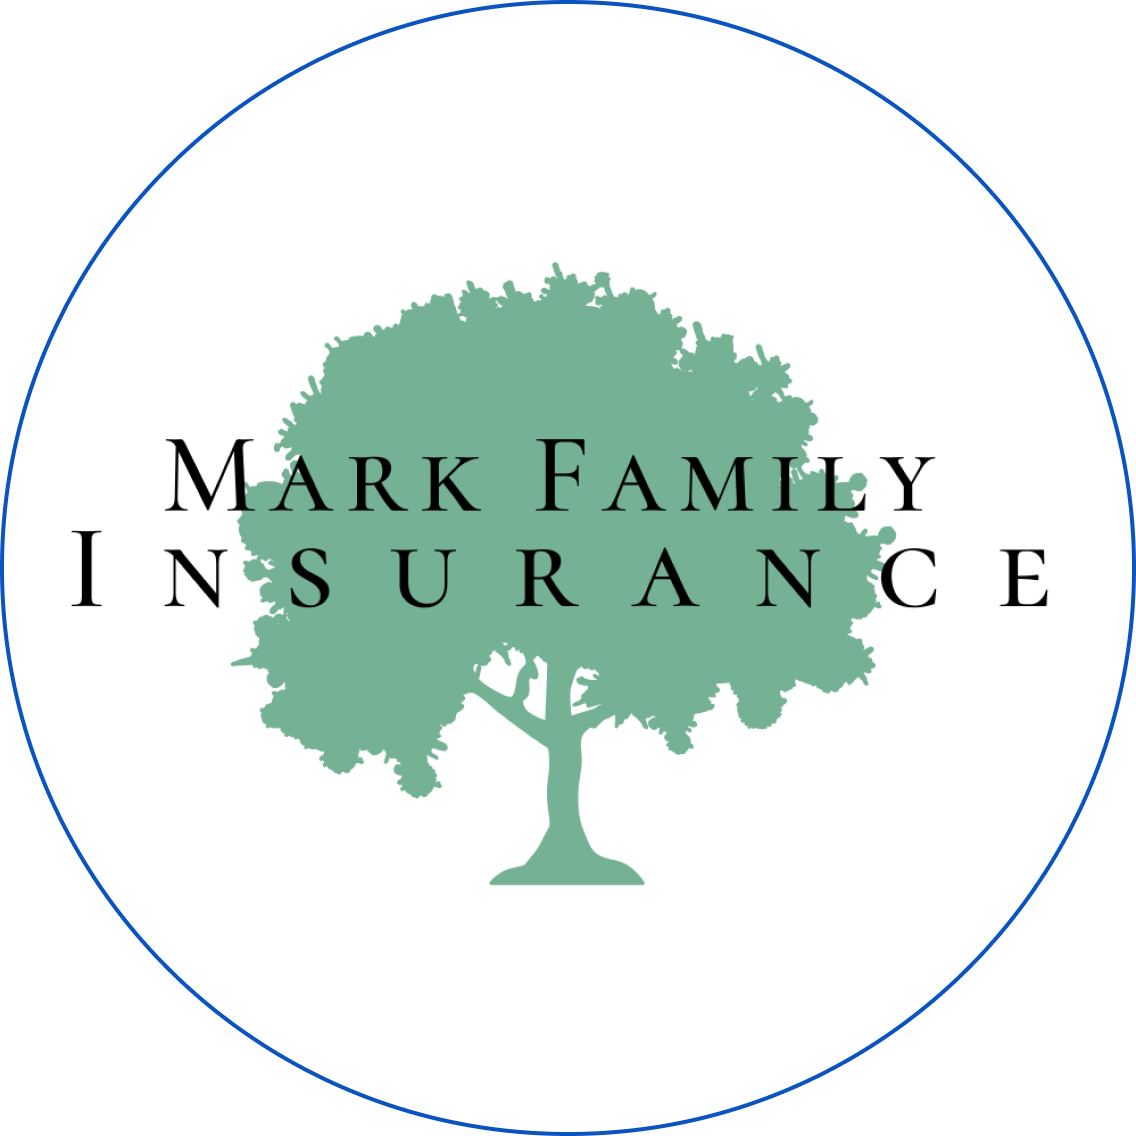 Mark family insurance (1)